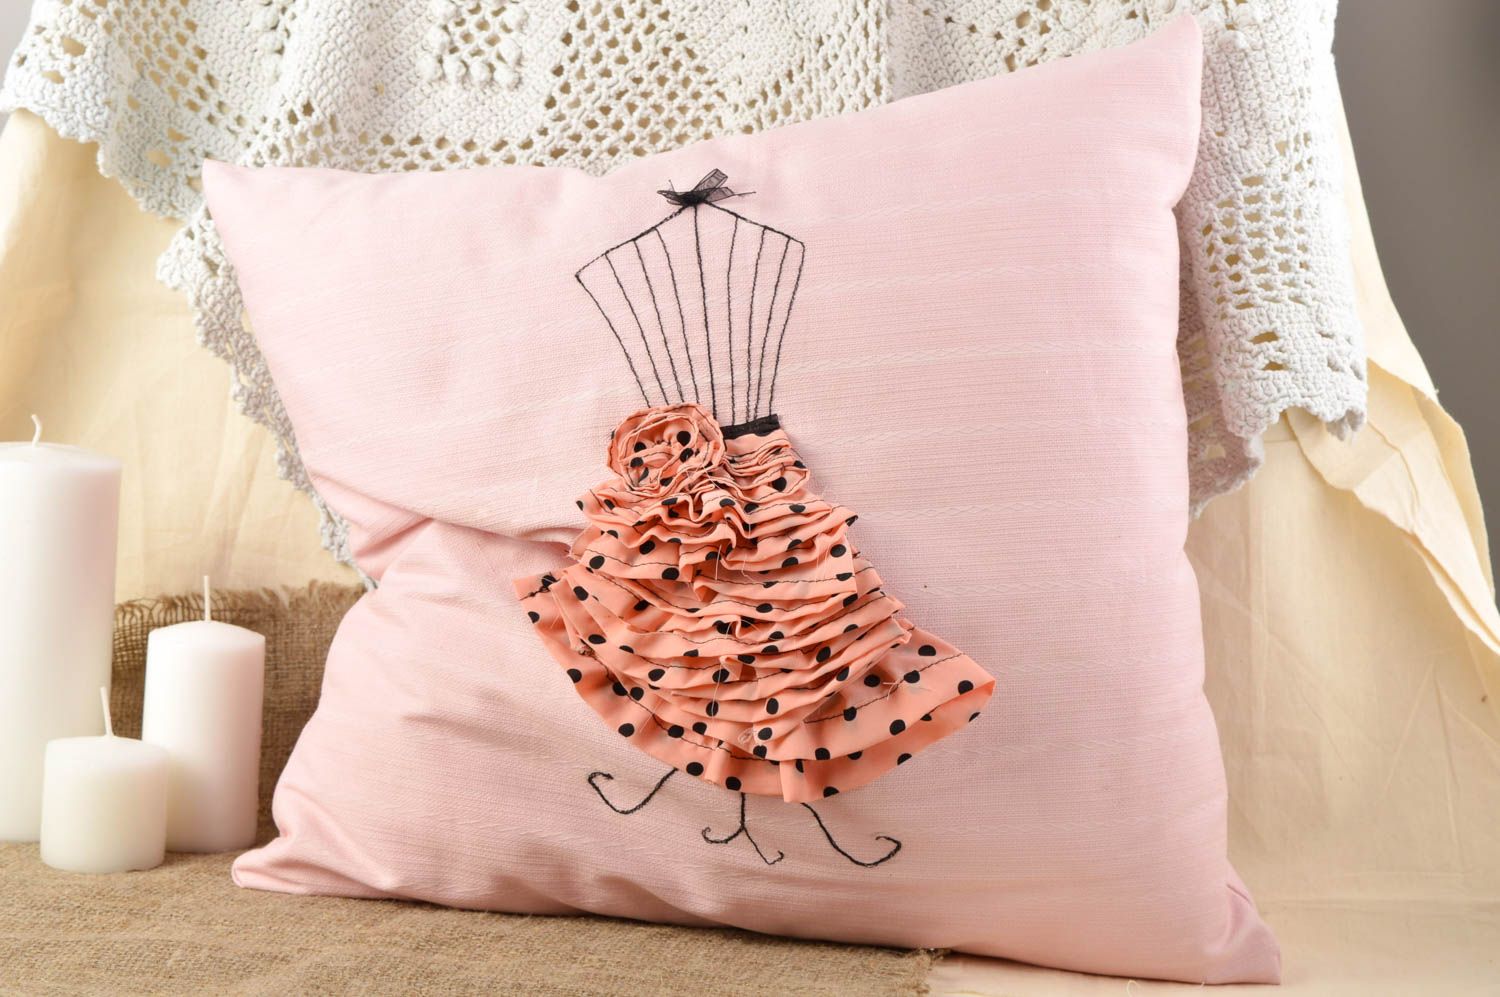 Stylish handmade throw pillow interior decorating gift ideas decorative use only photo 1